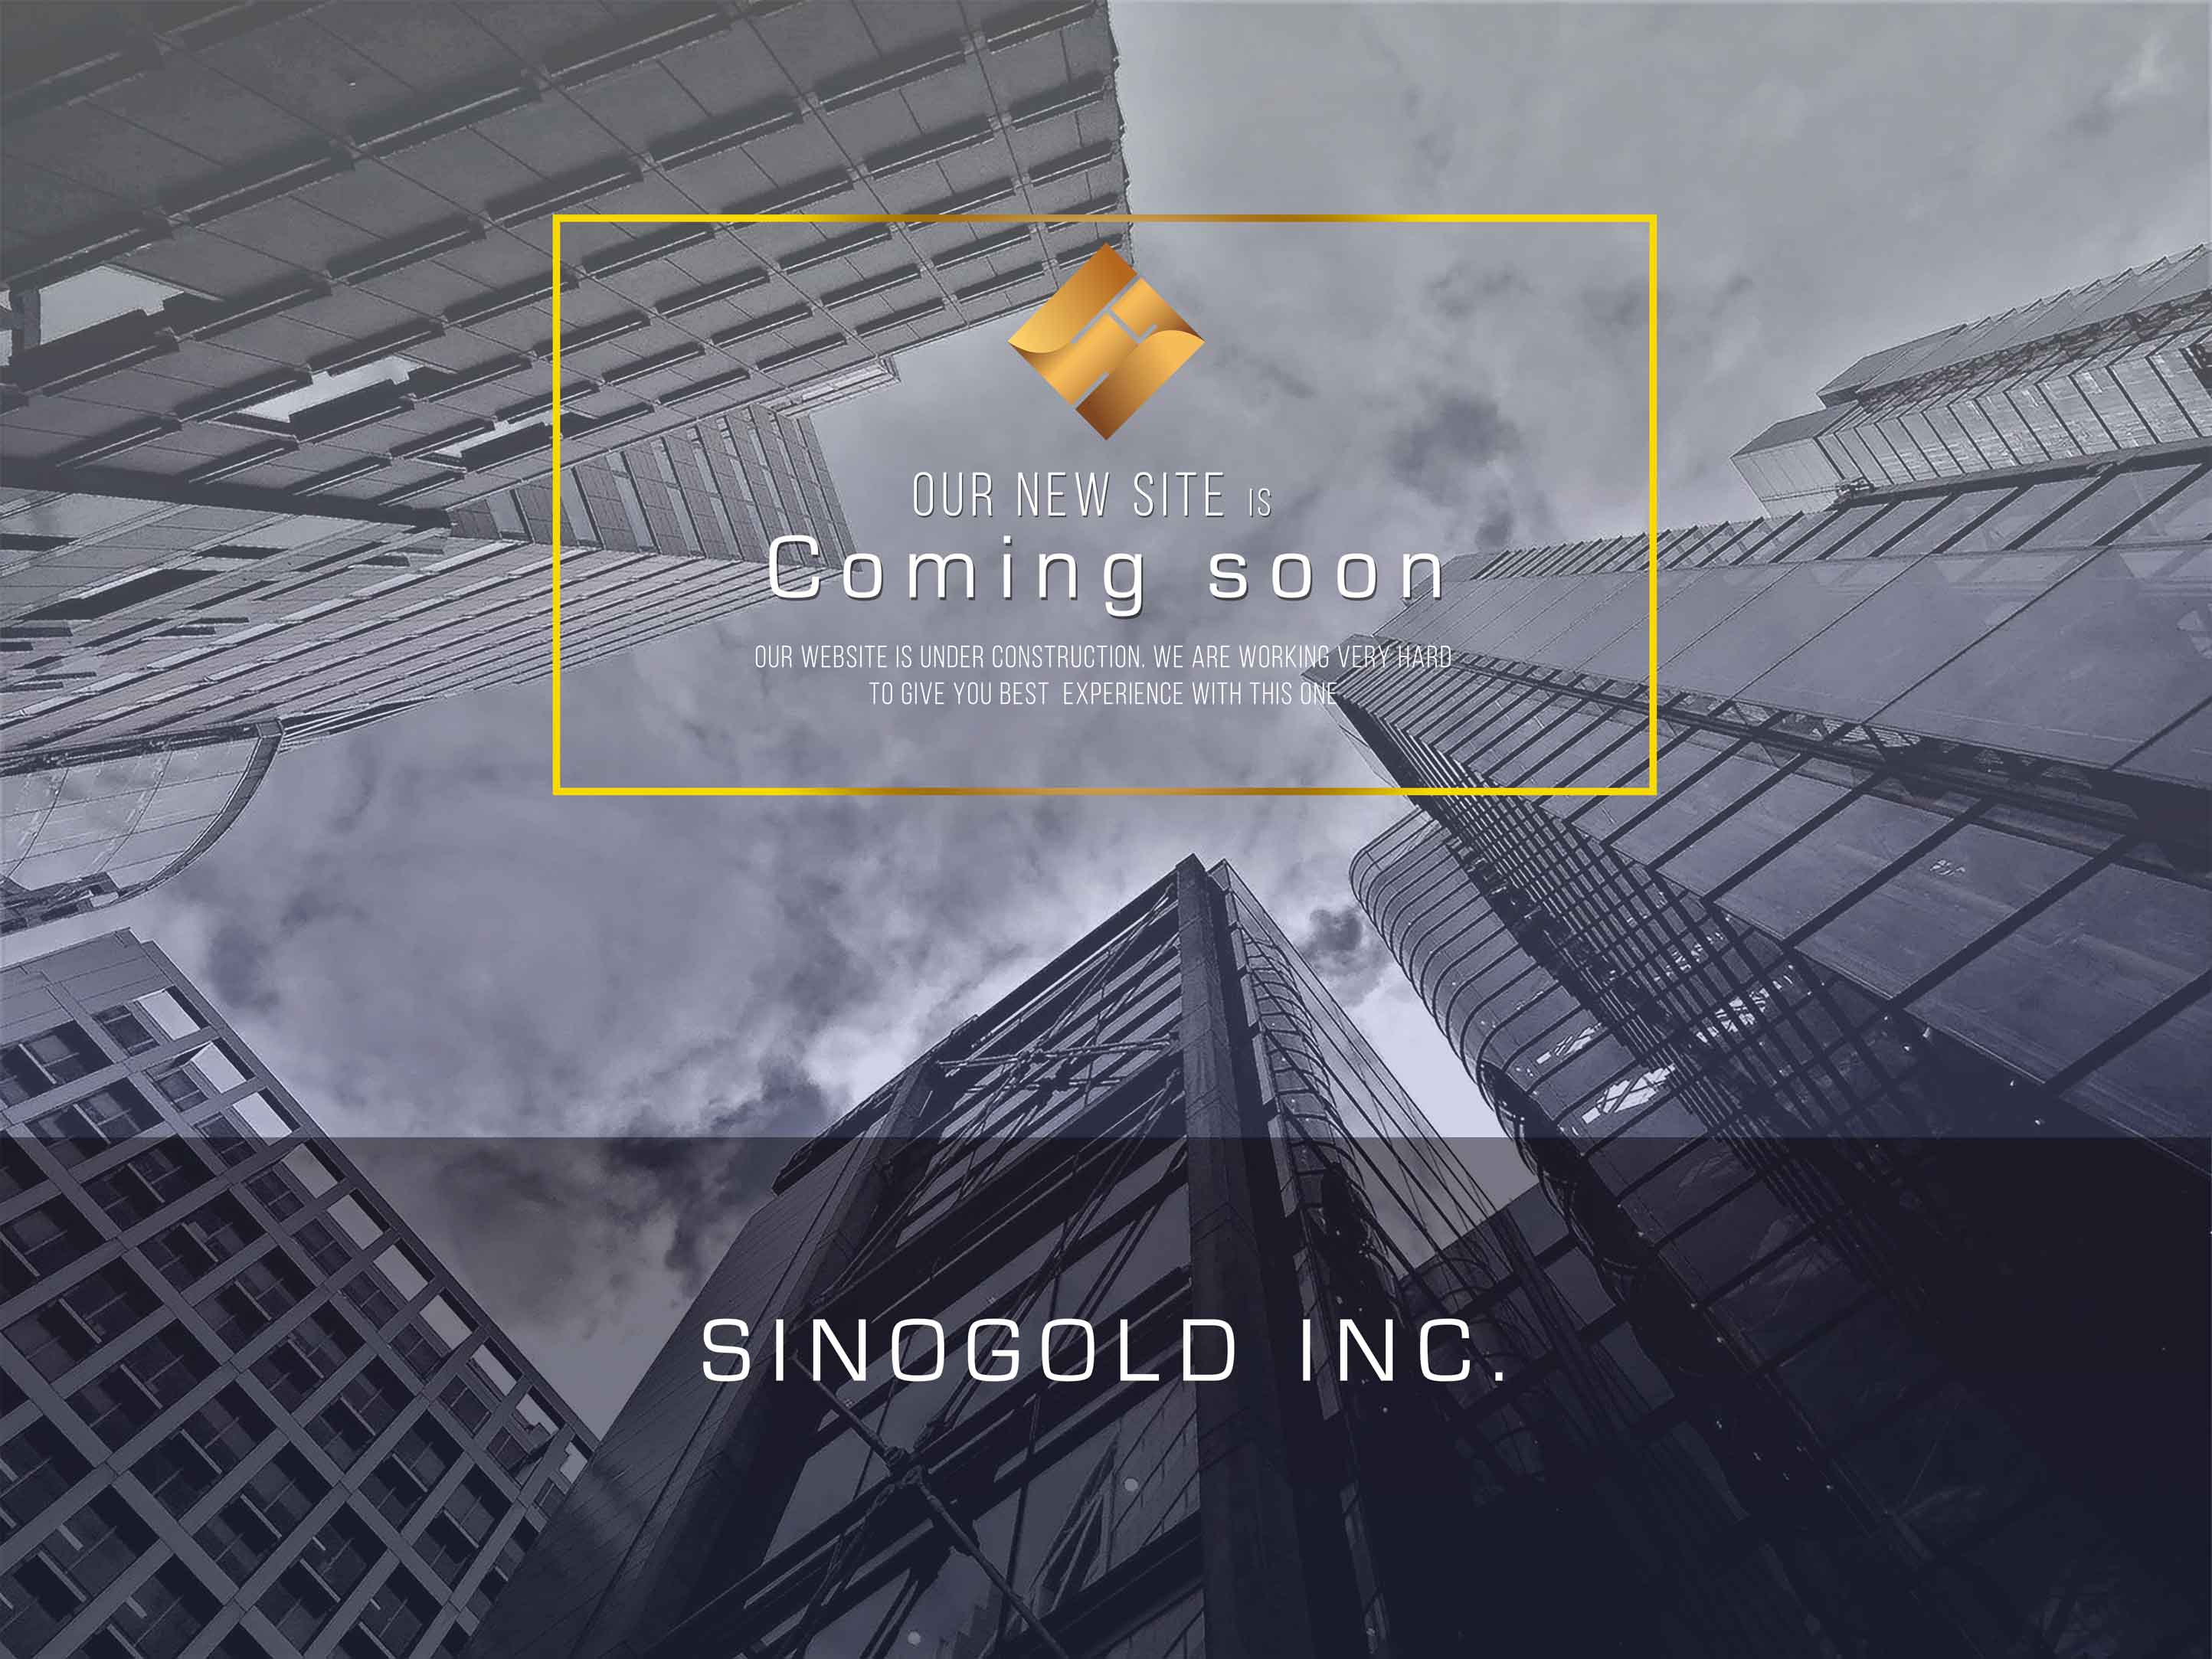 Sinogold Inc